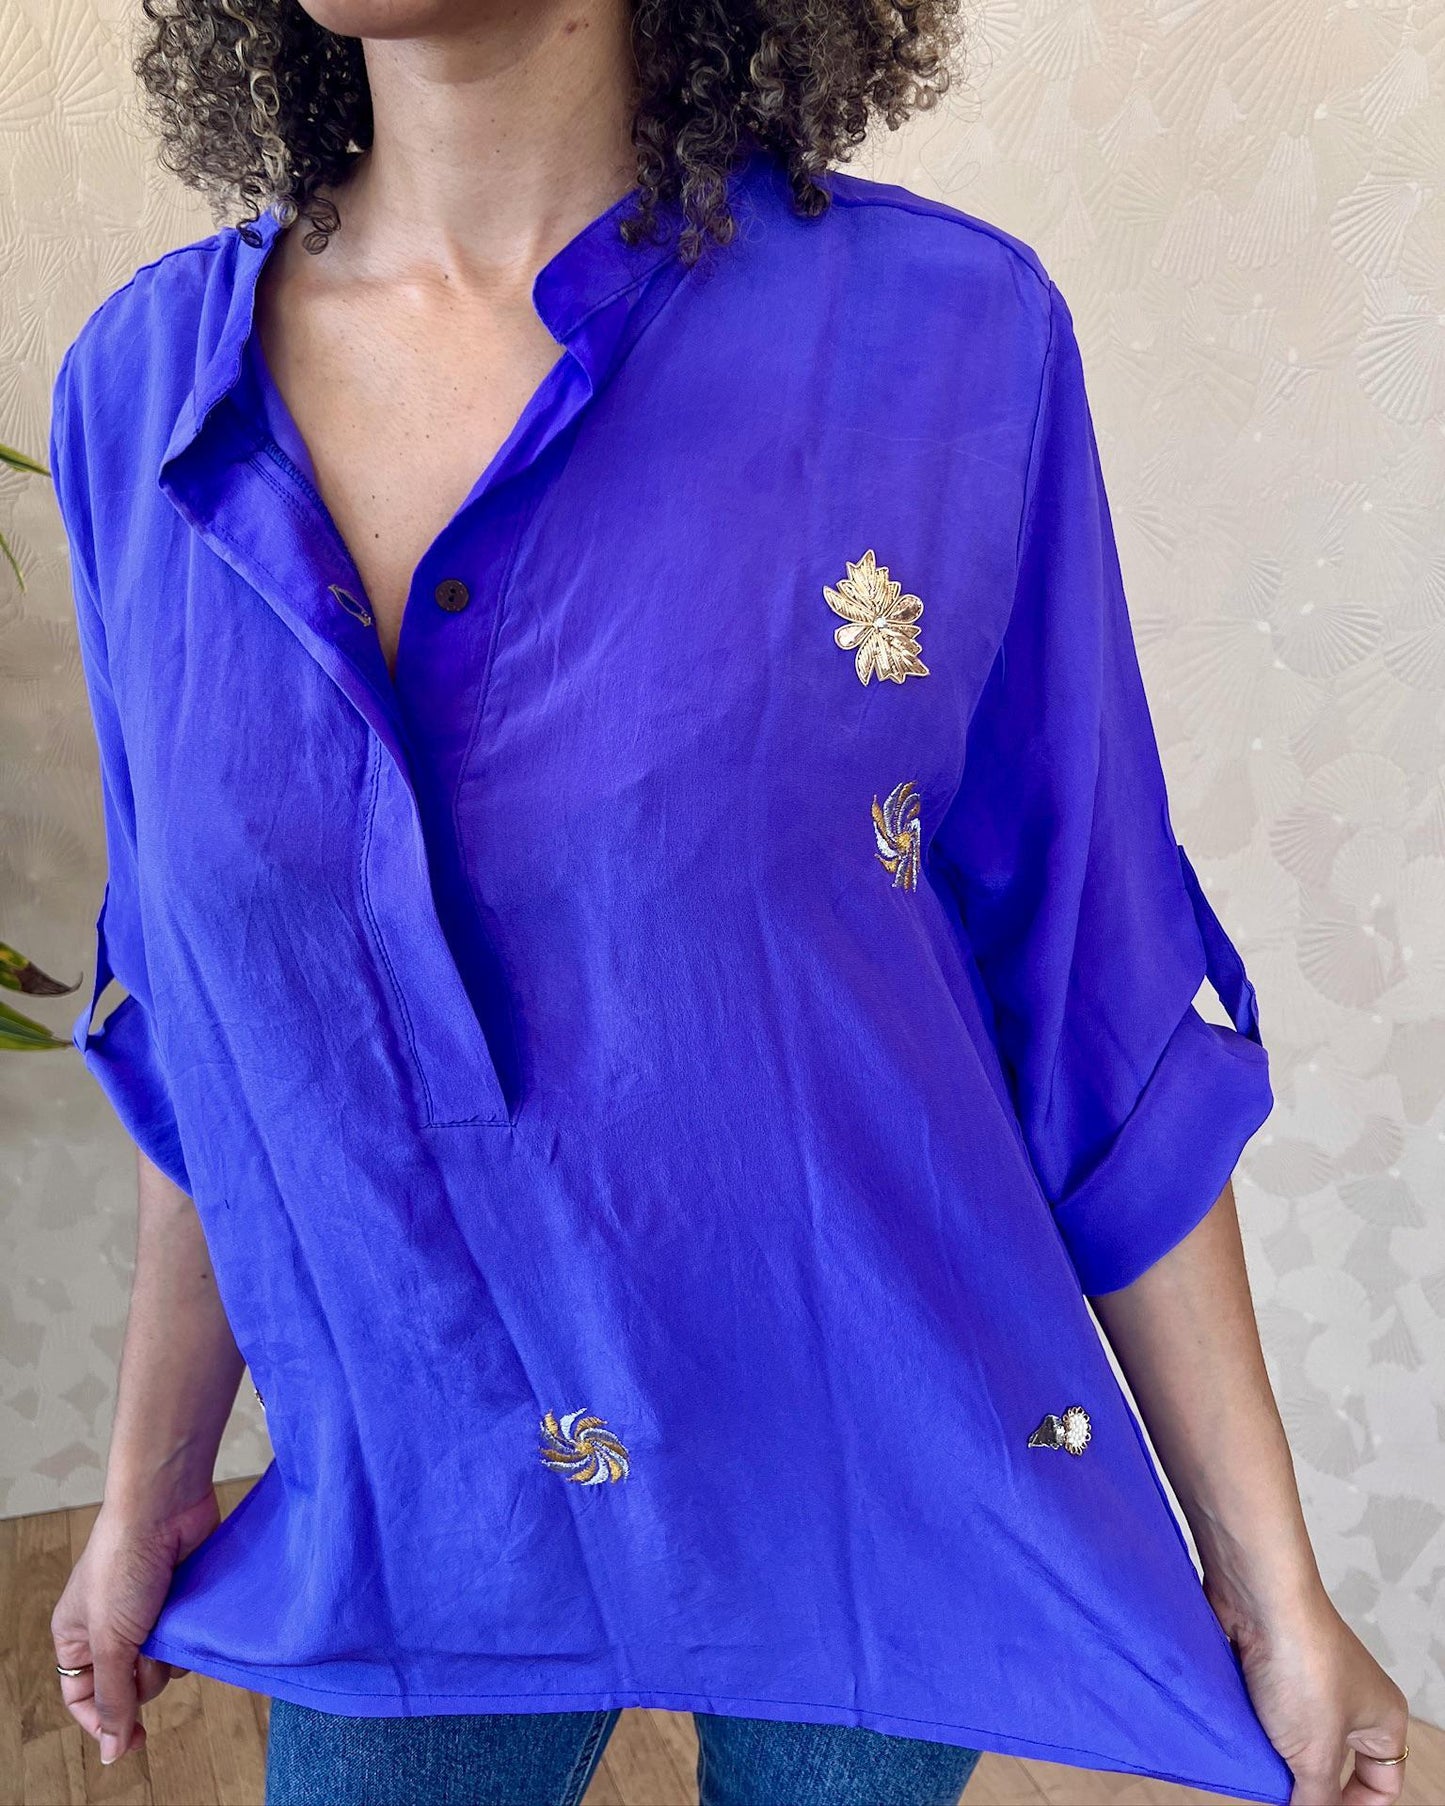 Indie Ella Talynn Silk Top in Royal Purple -size S/M